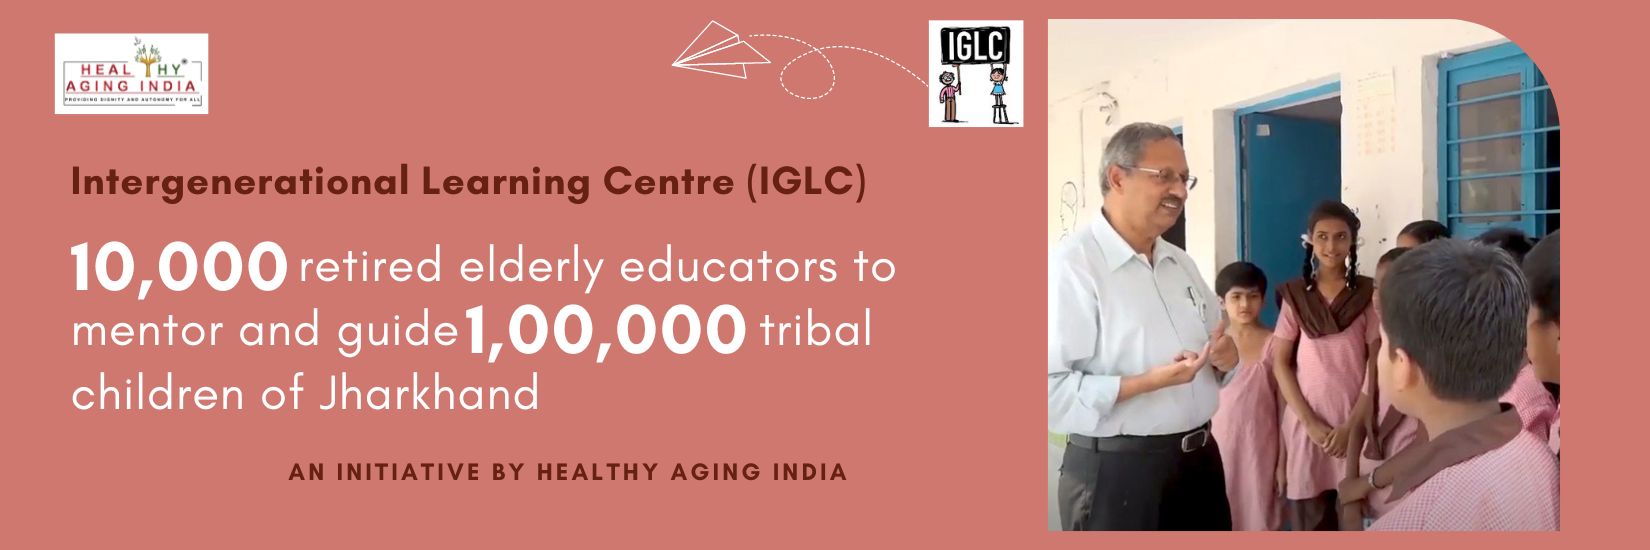 IGLC - Intergenerational Learning Centre Banner